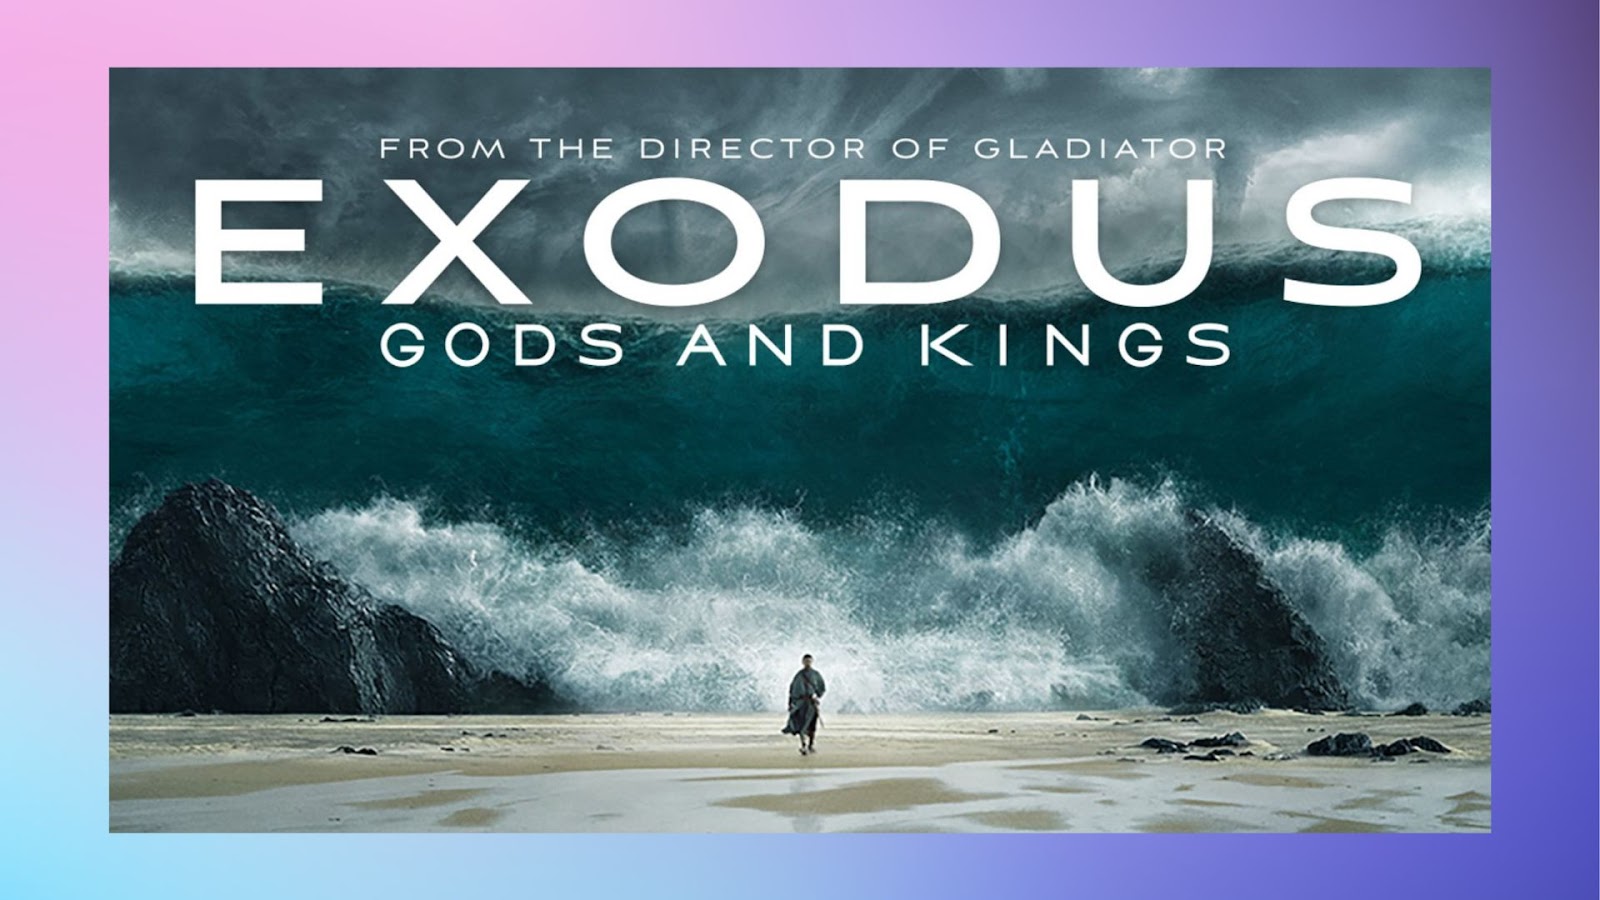 Christian Movies on Hulu - Exodus Gods and Kings